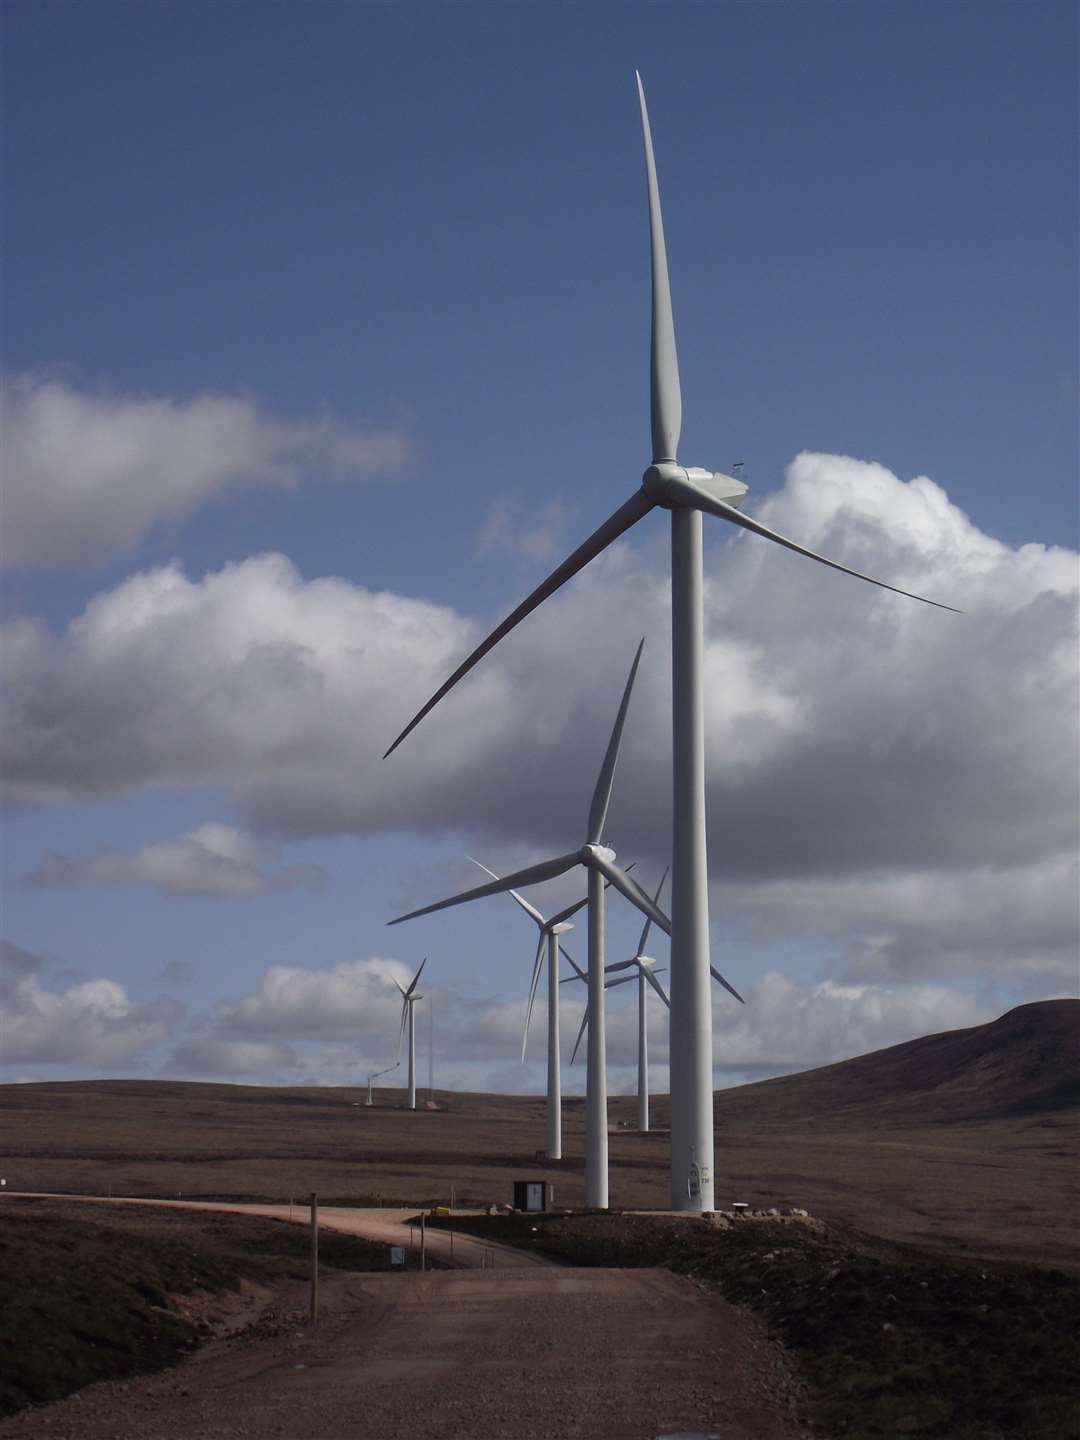 Gordonbush wind farm has been operating since 2012.